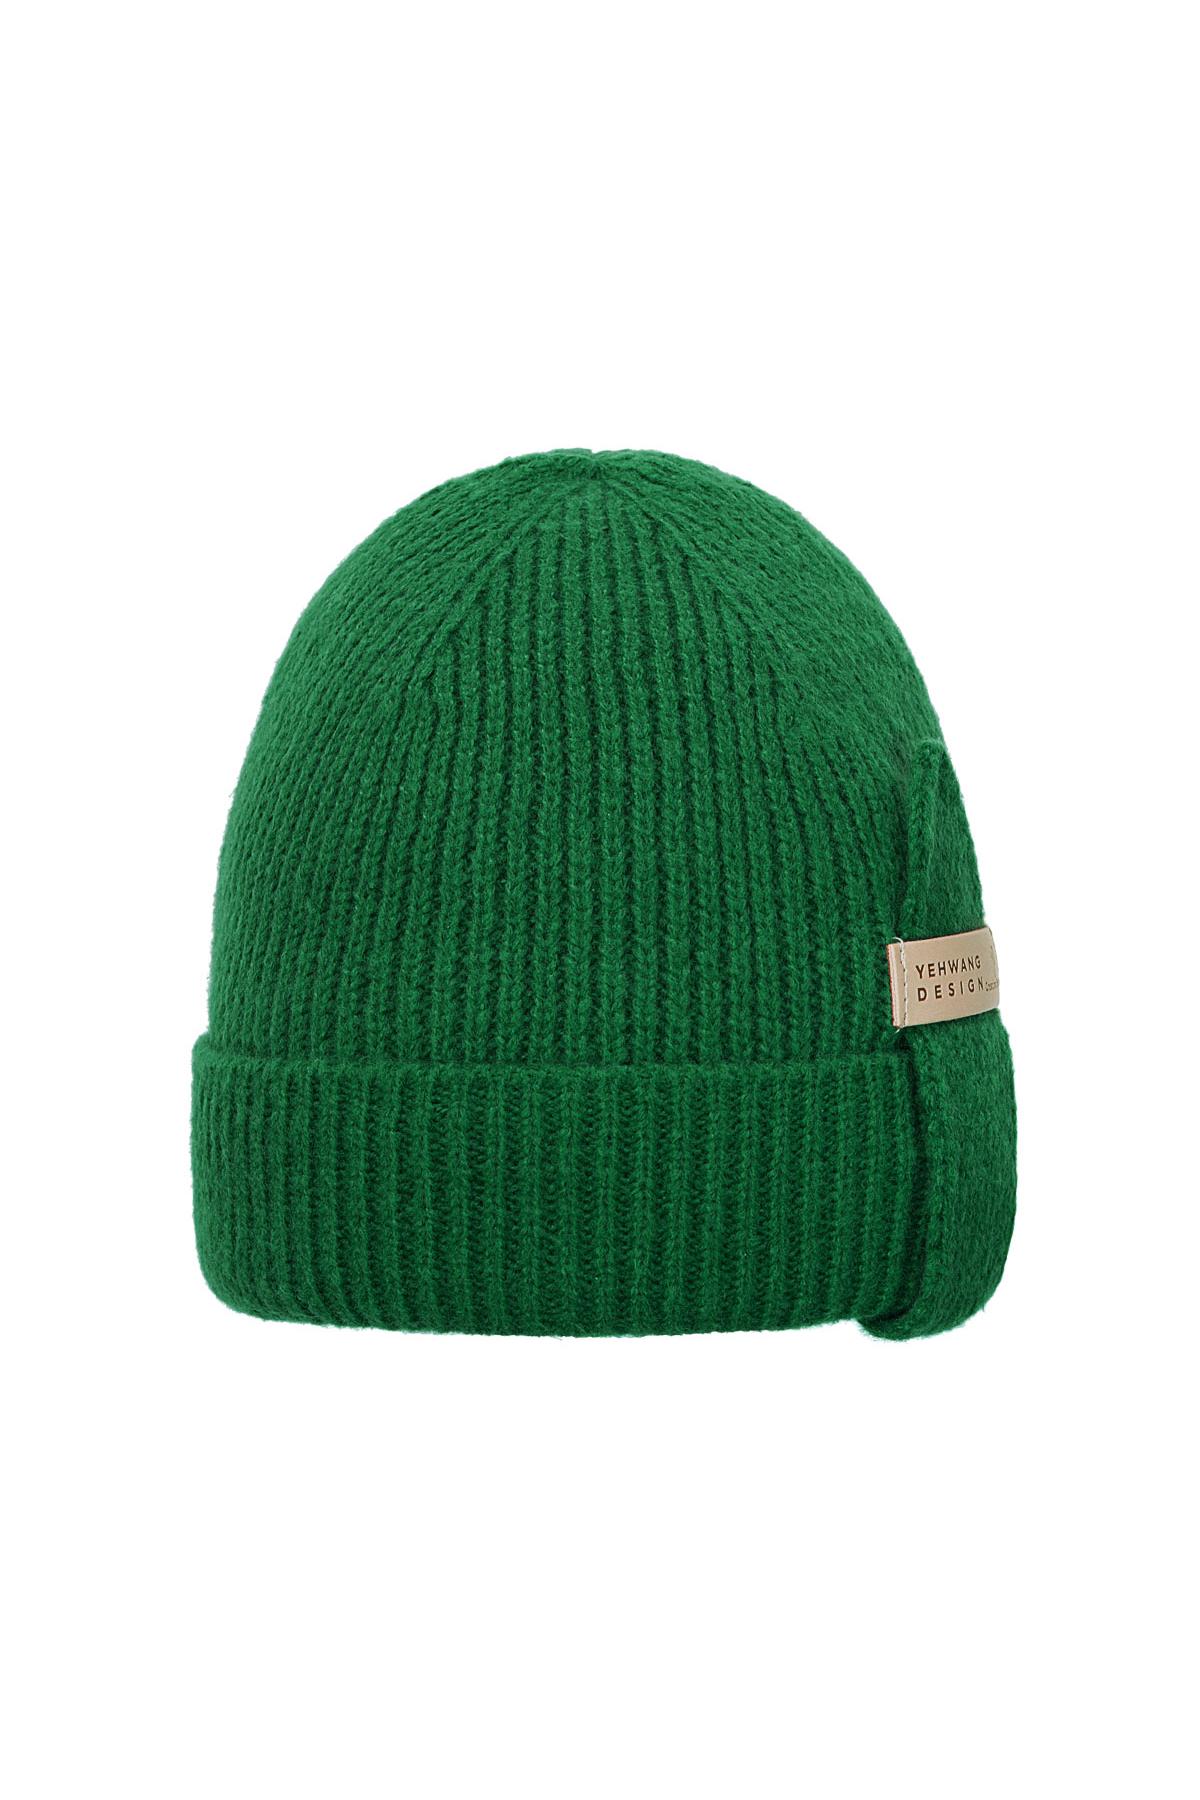 Mütze Yehwang Grün Polyester h5 